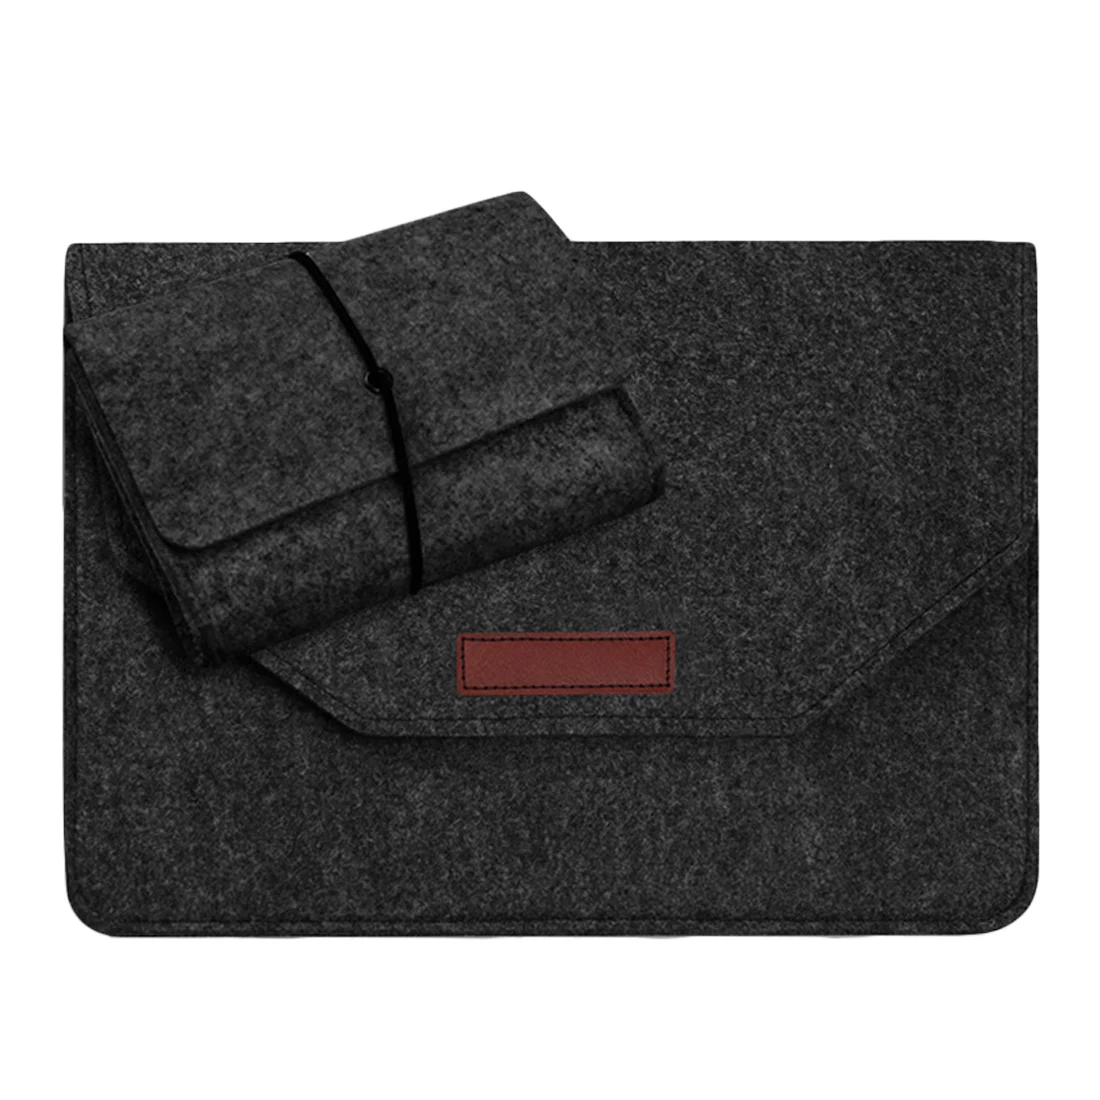 Мягкая сумка для ноутбука, чехол для Macbook Air Pro retina 11 13 15 дюймов, чехол для ноутбука с защитой от царапин для Mac book